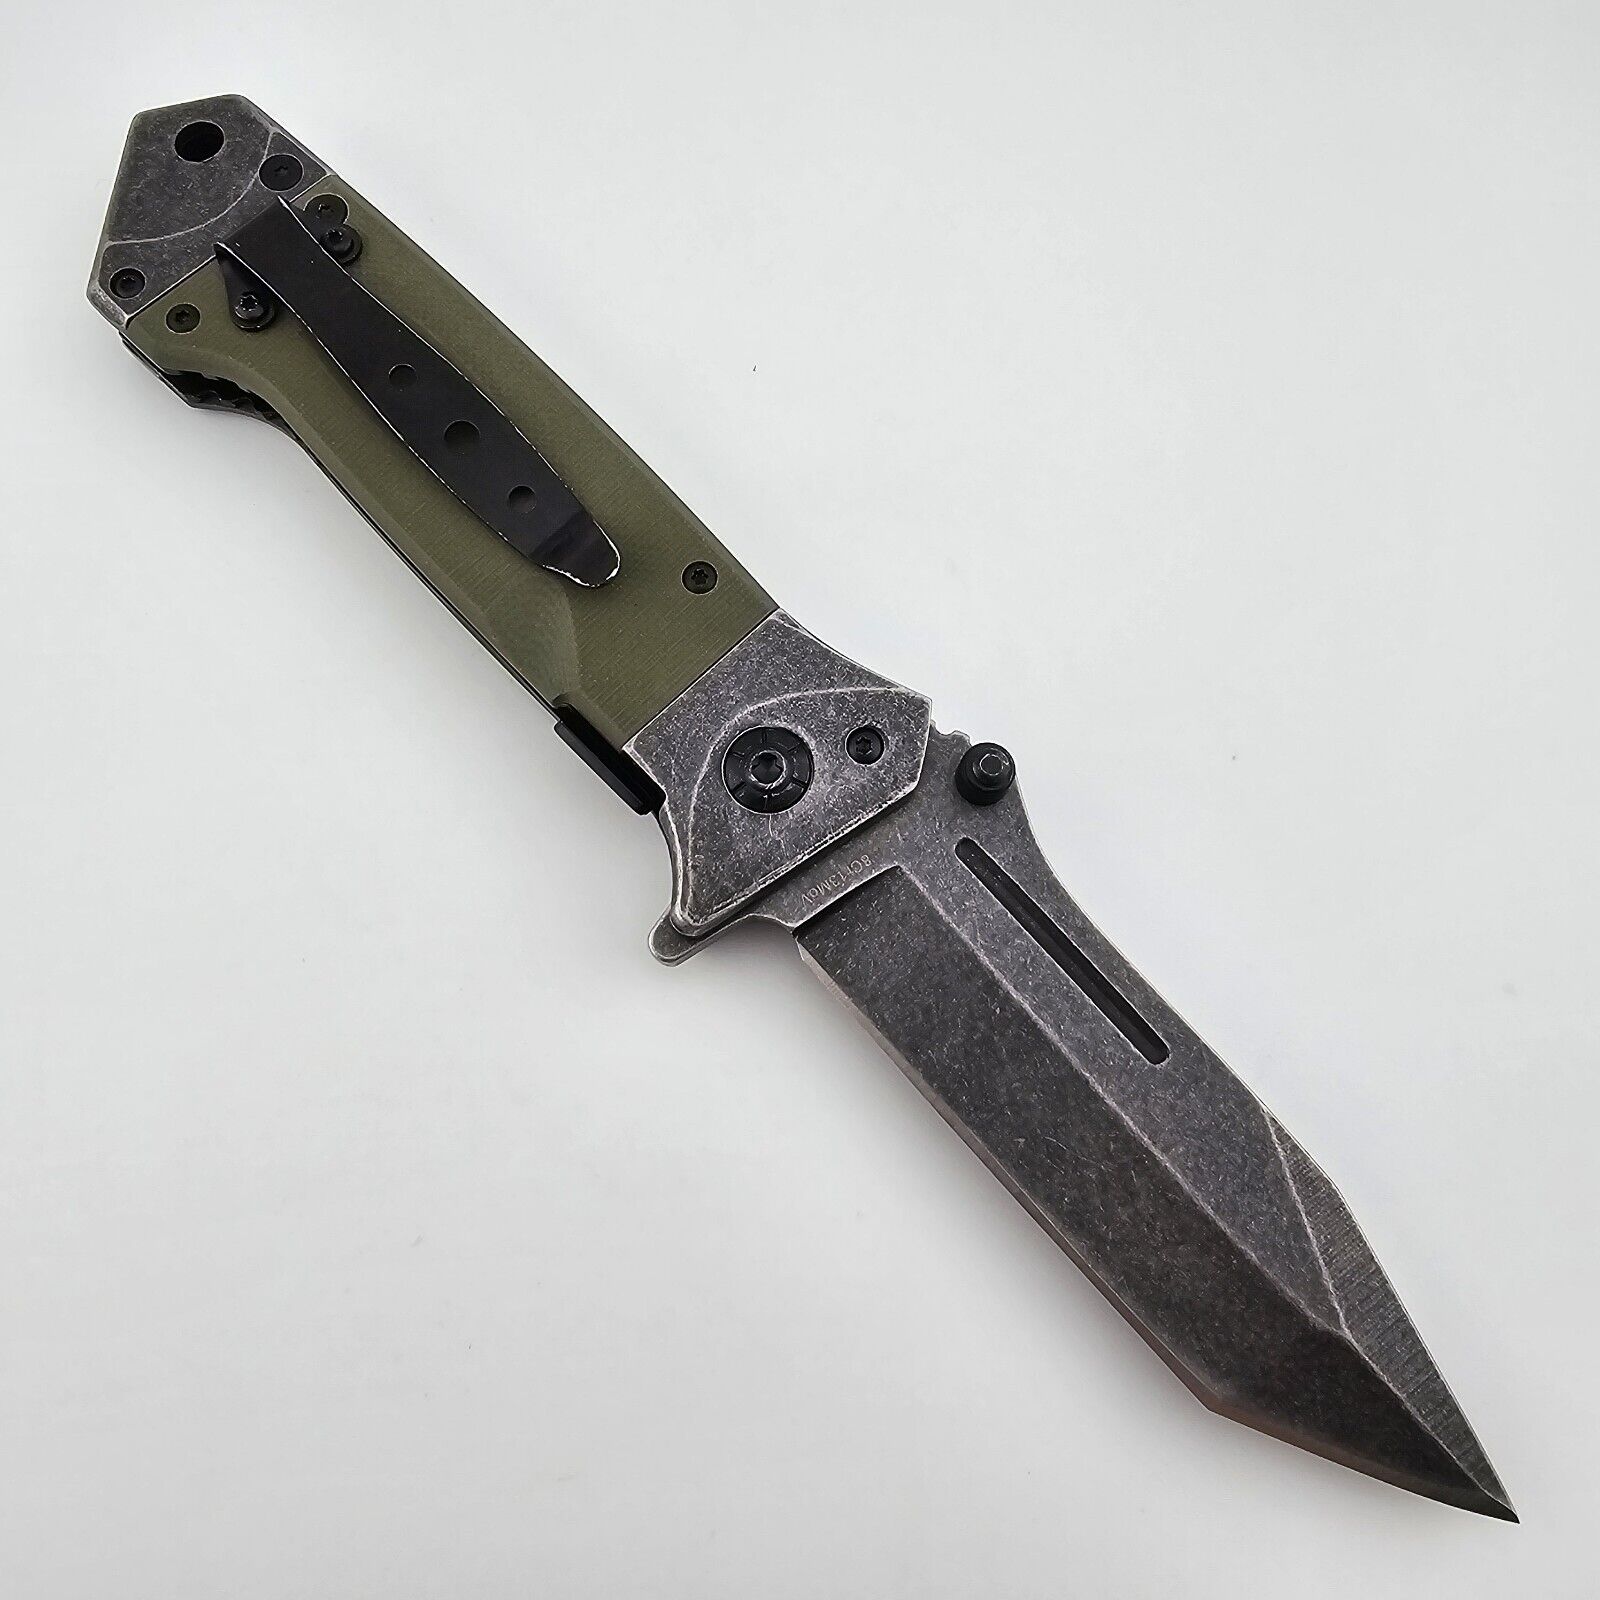 Vortek Warthog Folding Knife OD Green G10 Handles Tanto Blade VT-285GSW